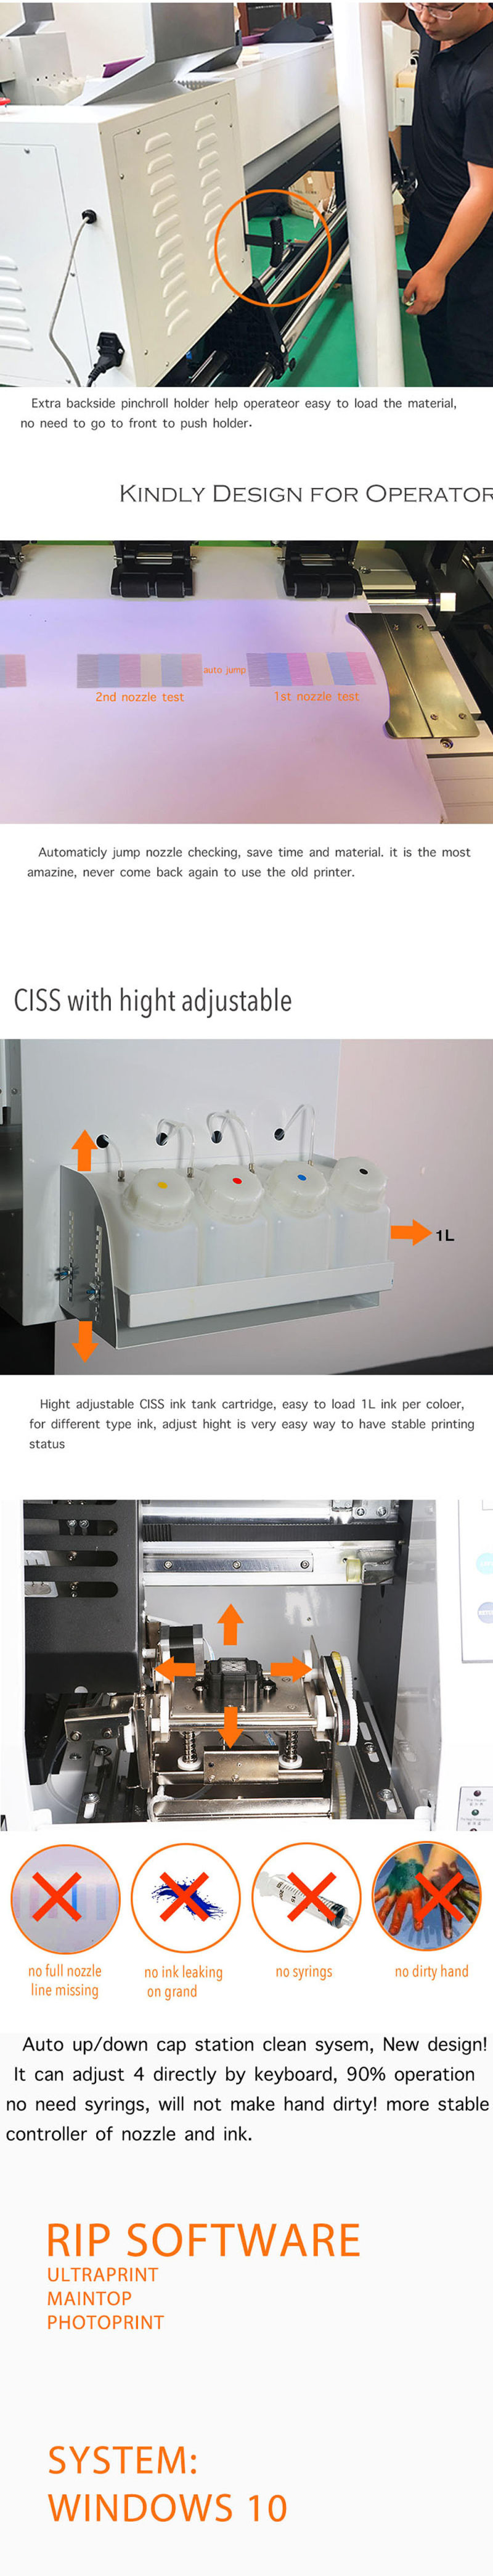 Tecjet Dx5 Dx7 XP600 Printhead Digital Inkjet Eco Solvent Printer Print on Flat Glass